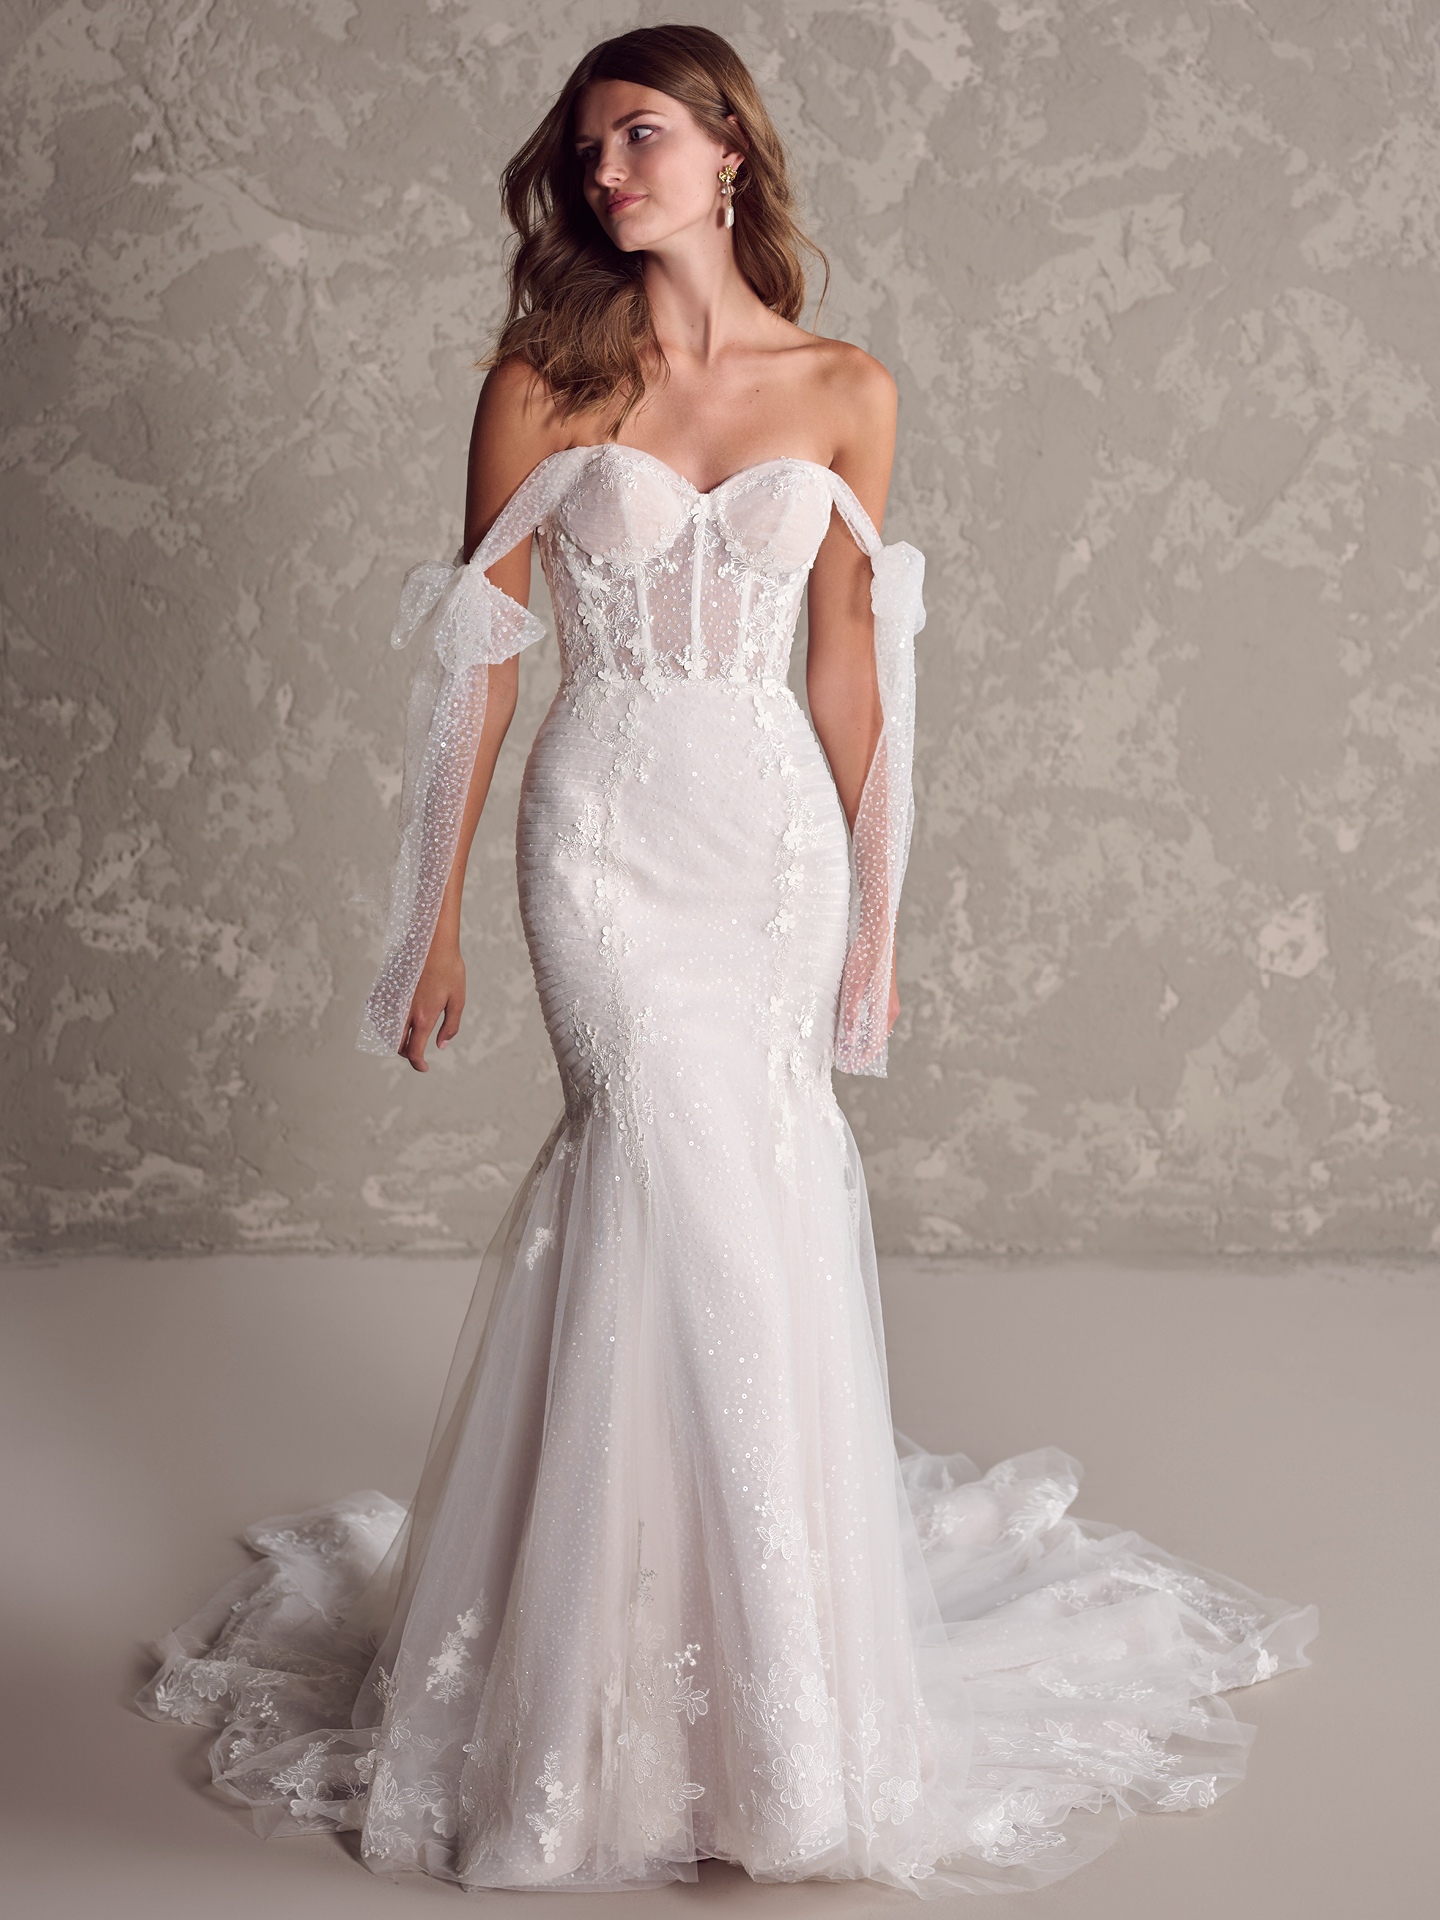 Tuscany Royale | Sparkly Bridal Dress Lace Sottero Maggie Sheath